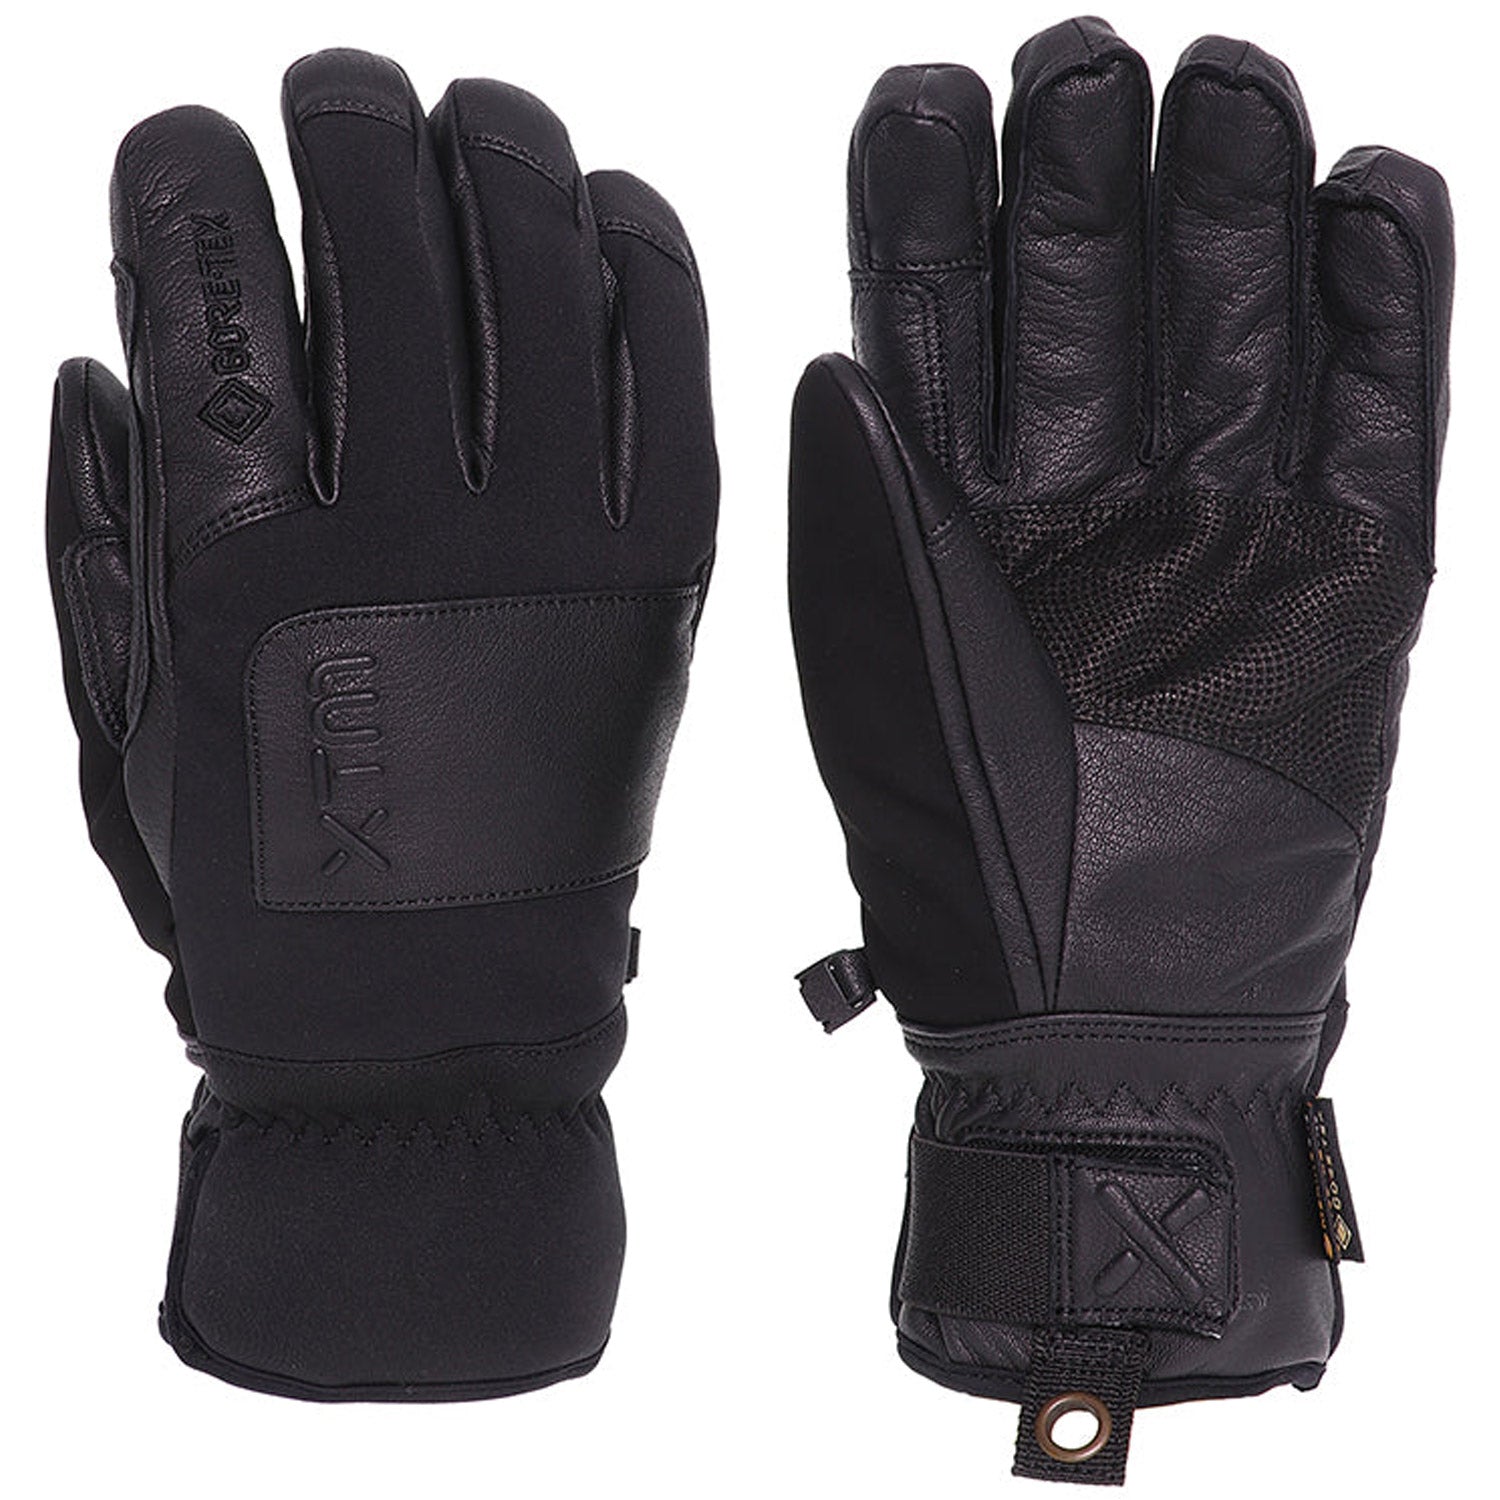 Patrol GORE-TEX Unisex Snow Glove